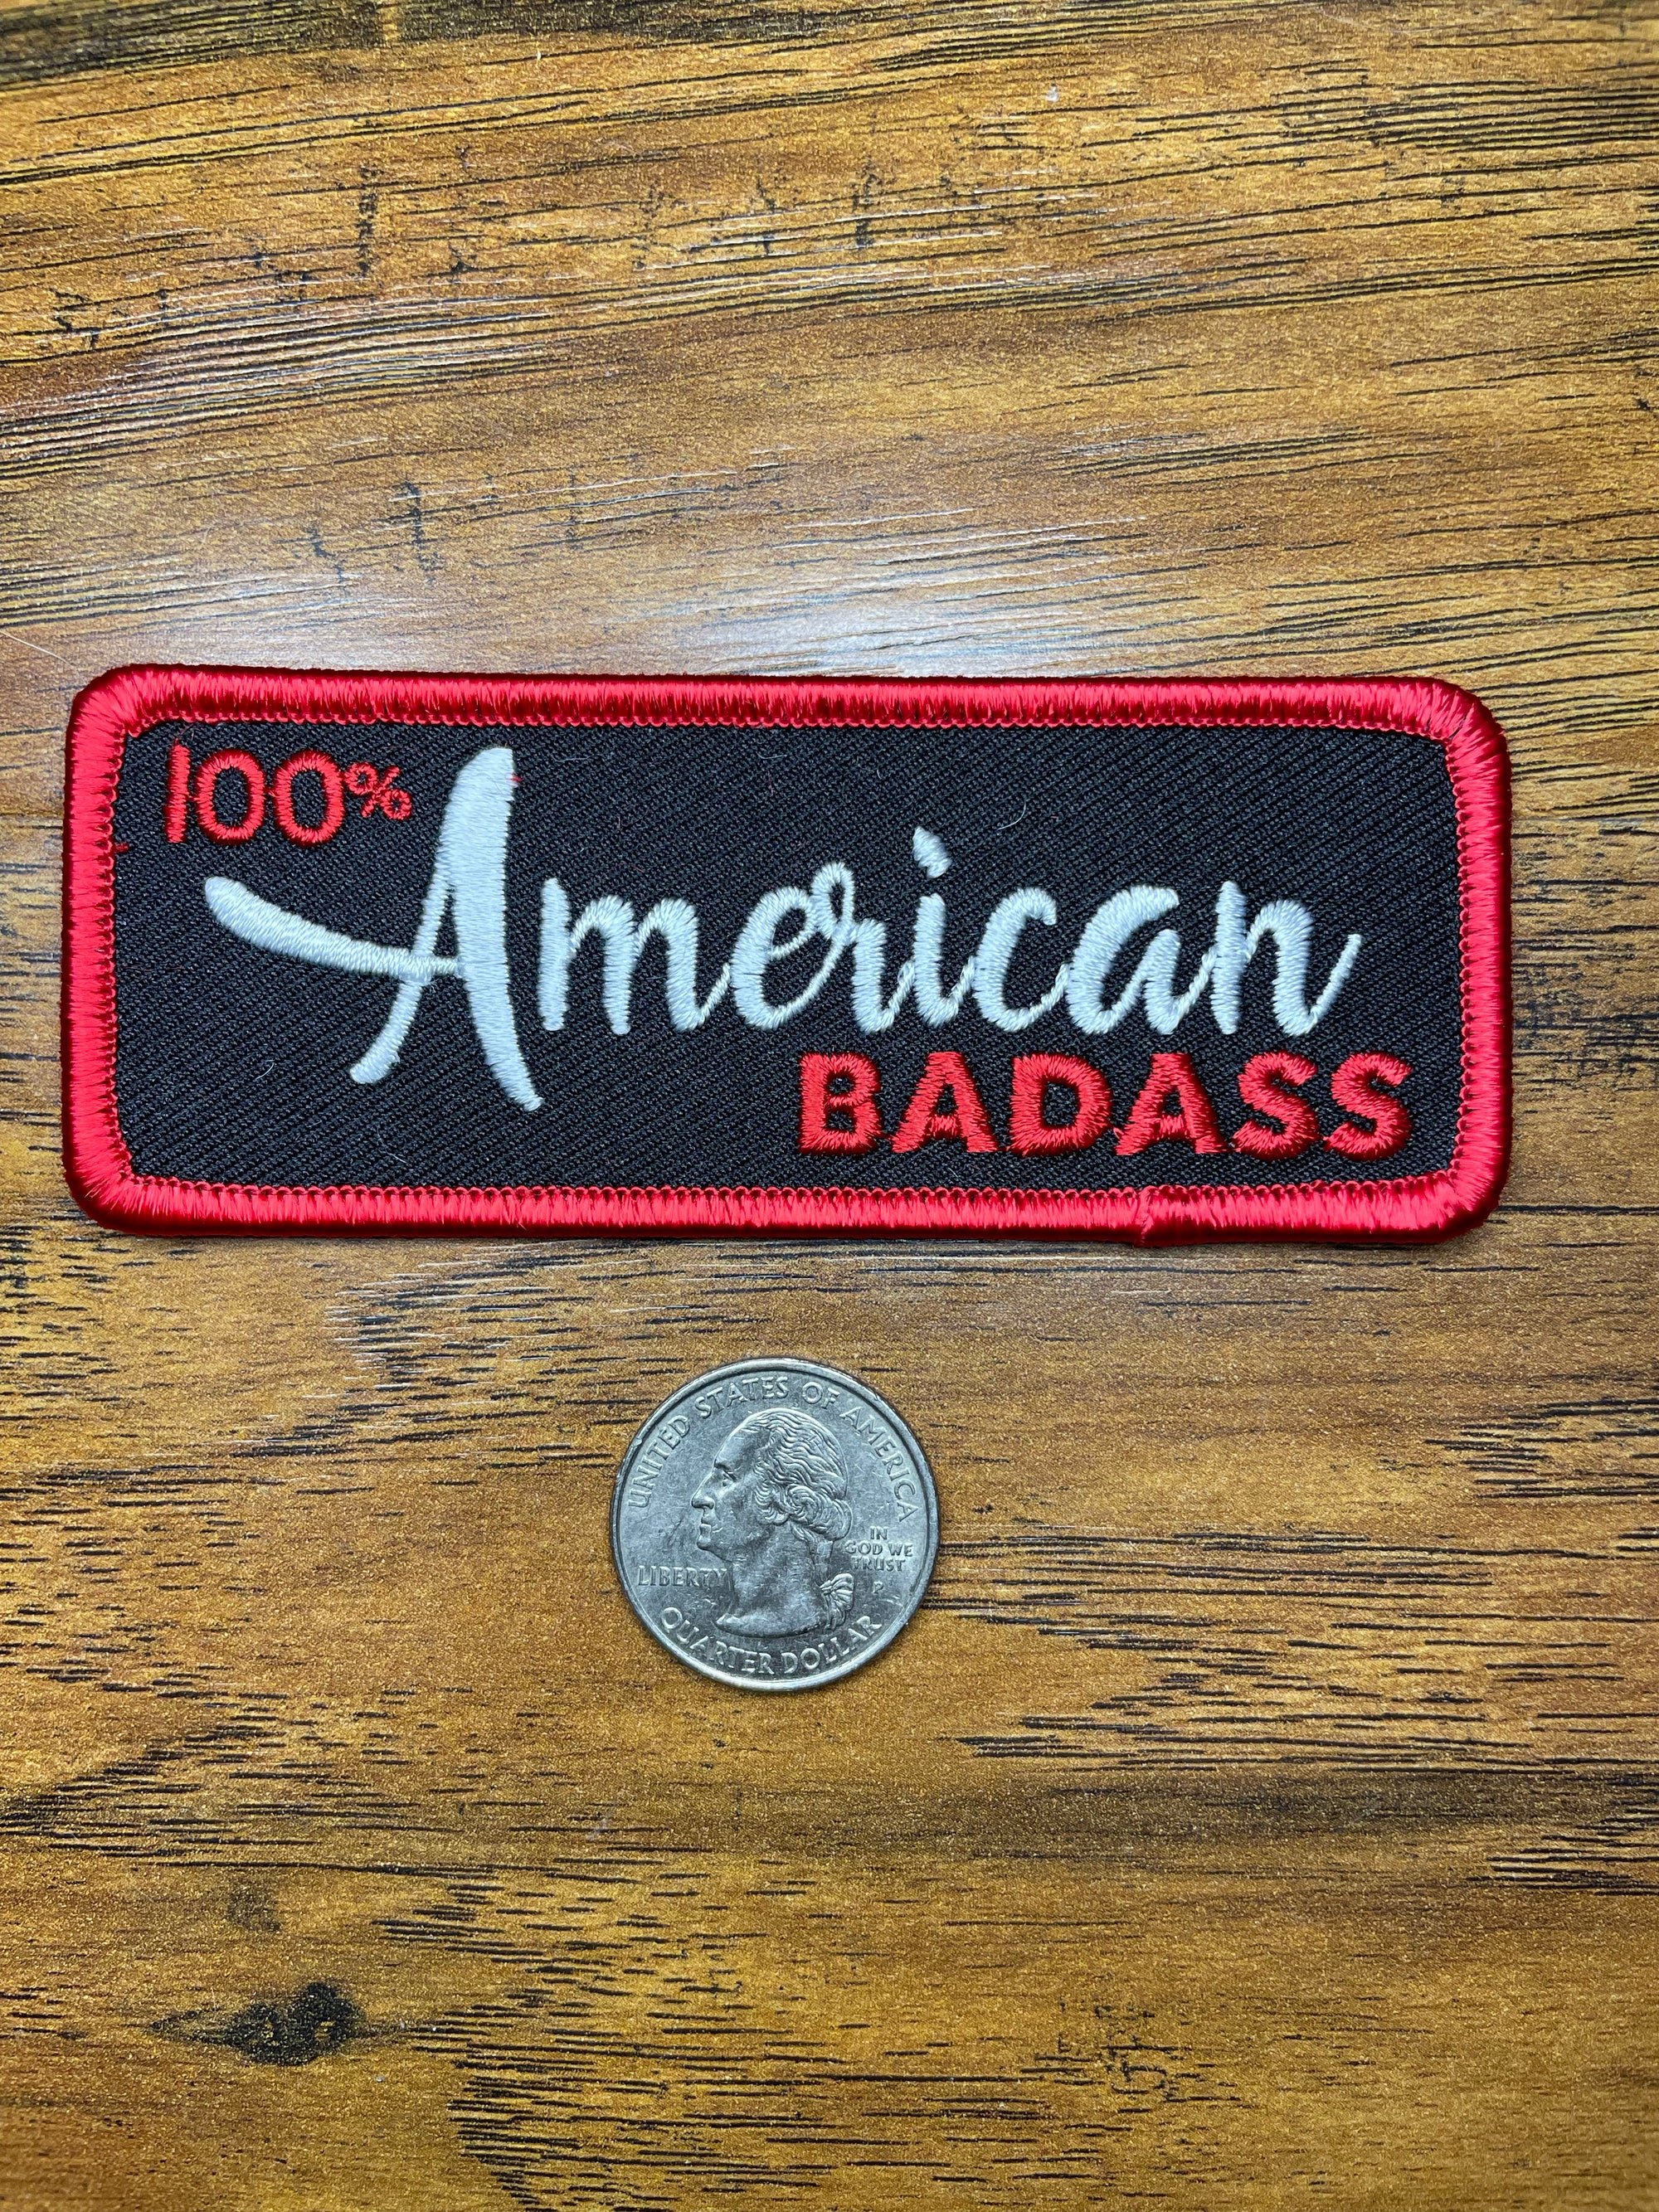 100% American Badass